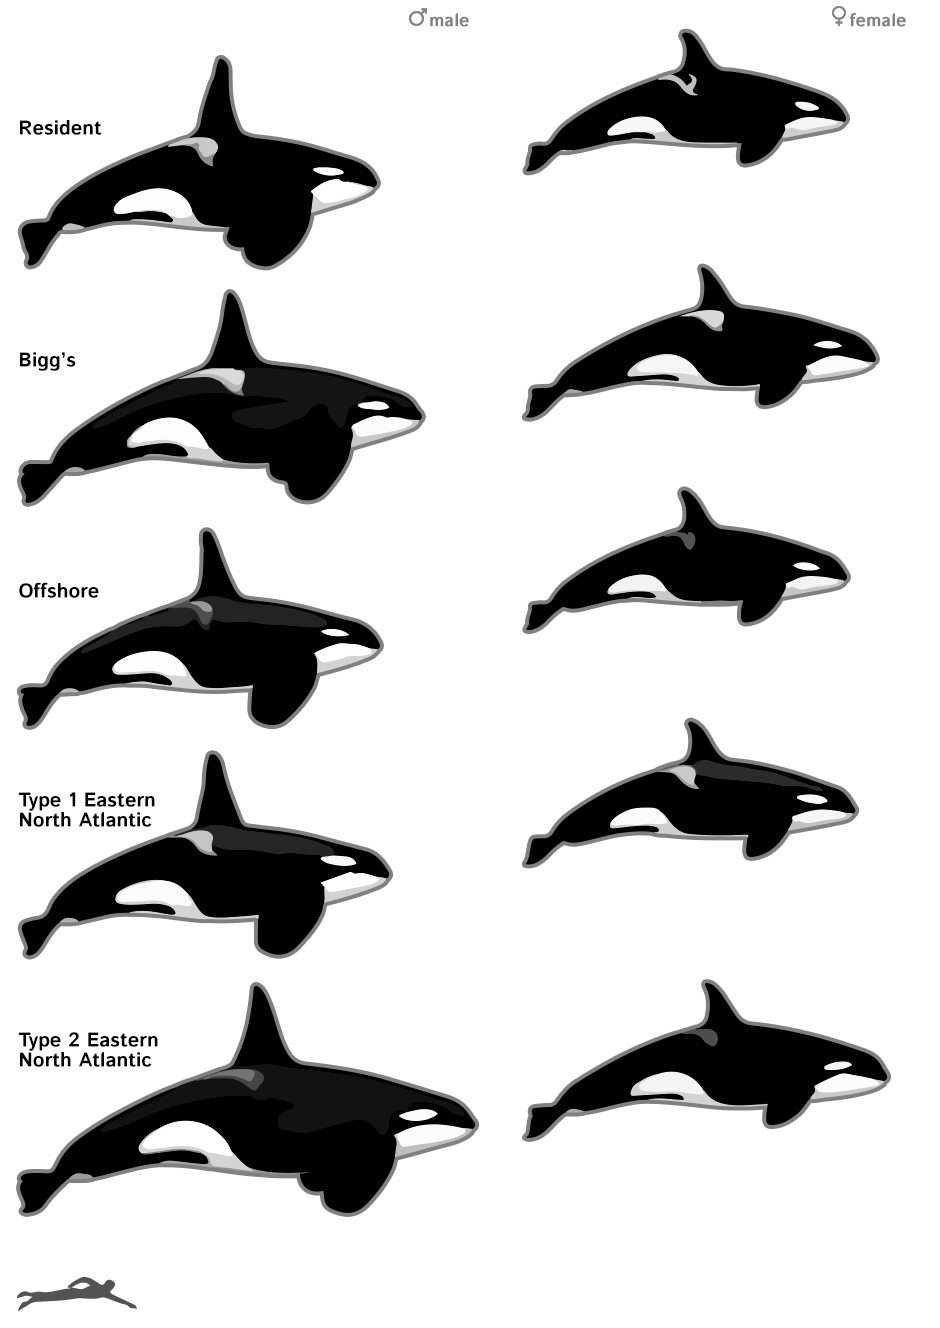 Northern Hemisphere Killer Whales